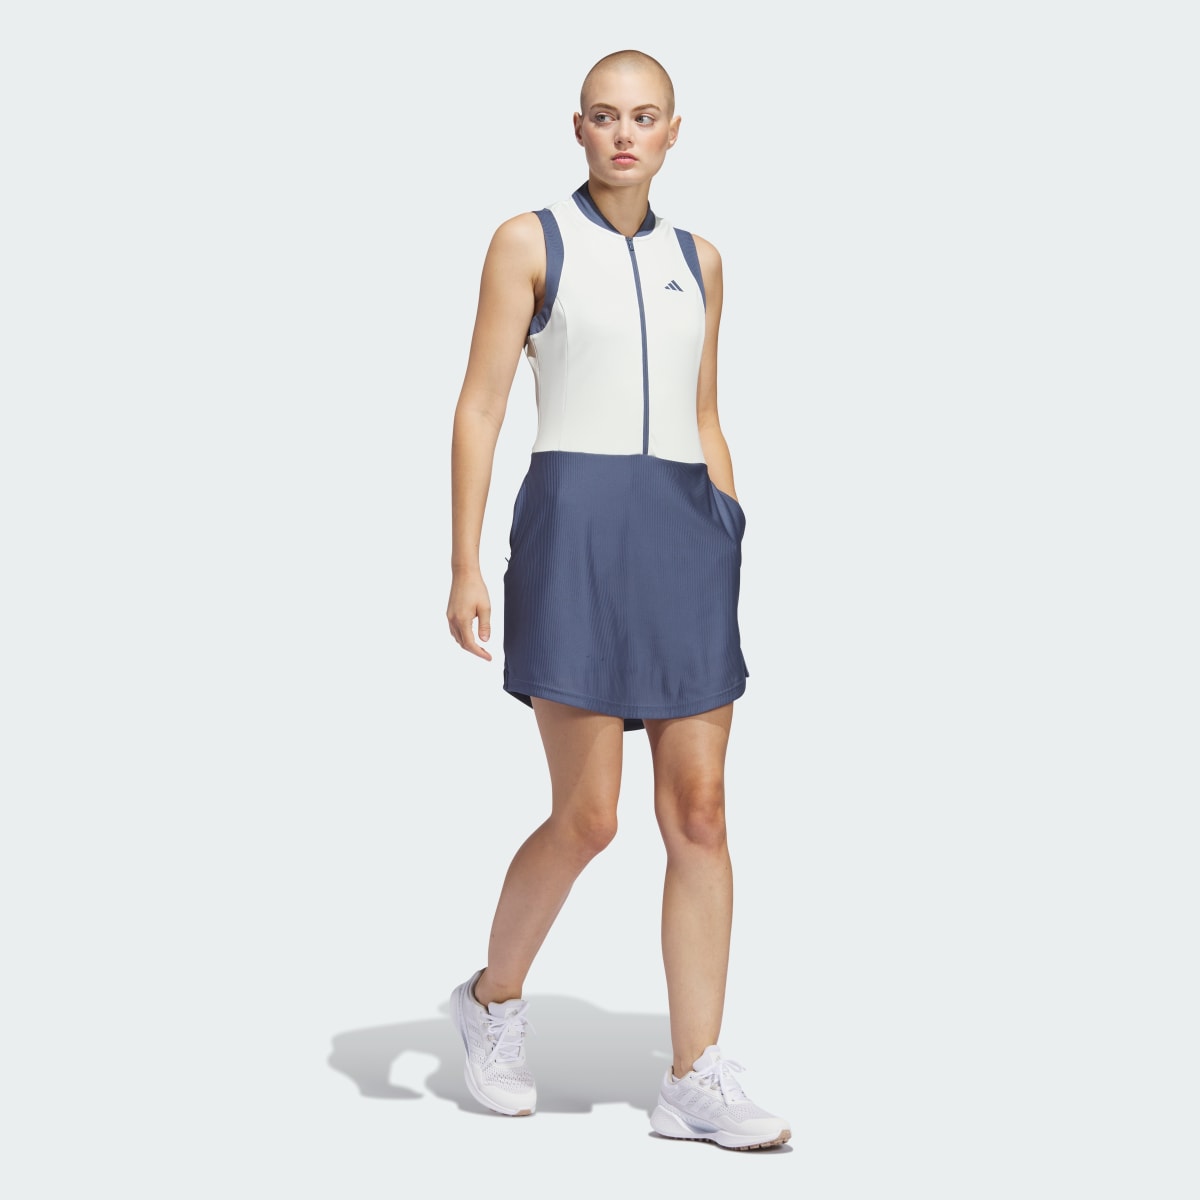 Adidas Ultimate365 Sleeveless Dress. 4